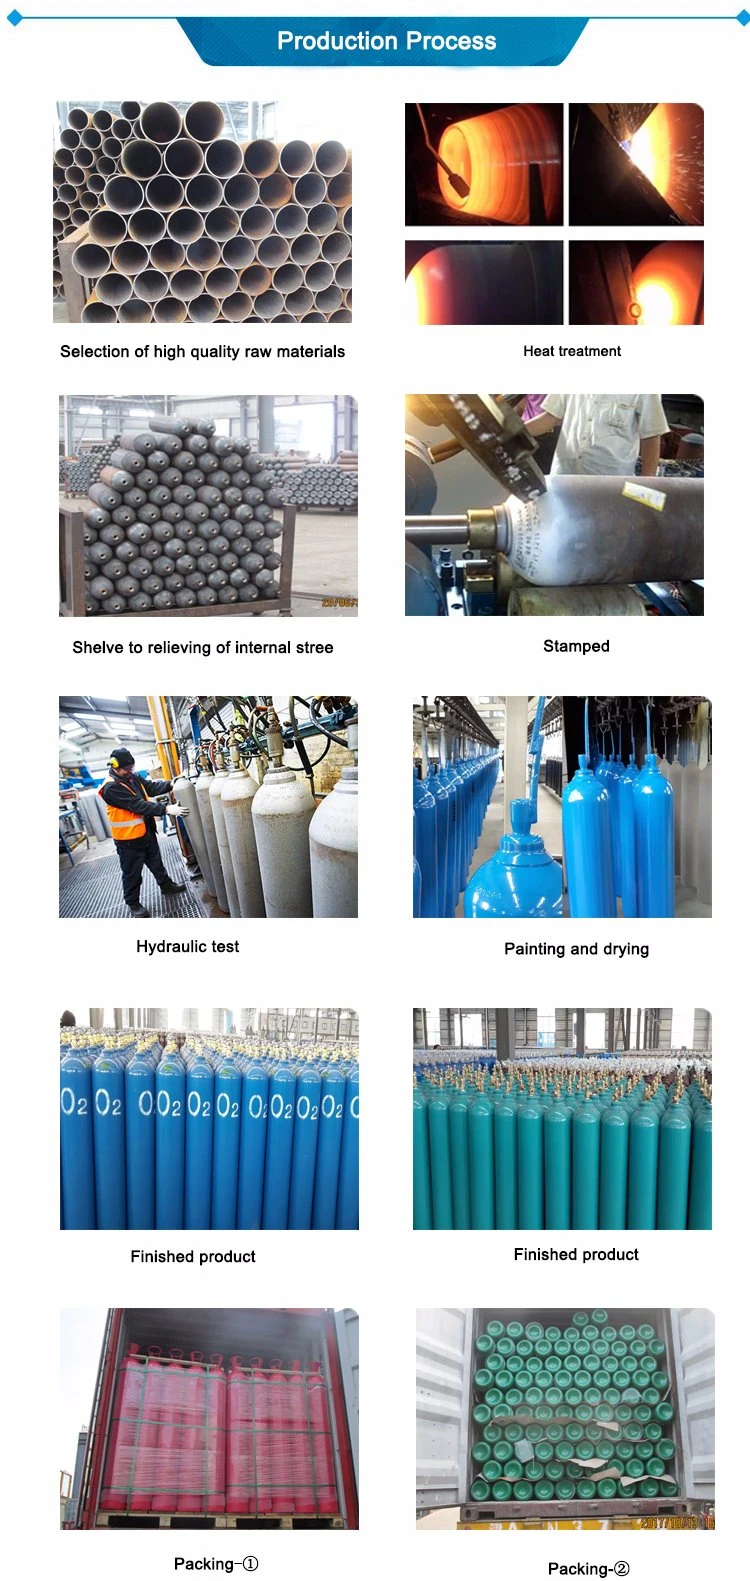 50L Helium Oxygen Nitrogen Lar CNG Acetylene CO2 Hydrogeen CNG 150bar/200bar Seamless Steel Gas Cylinder